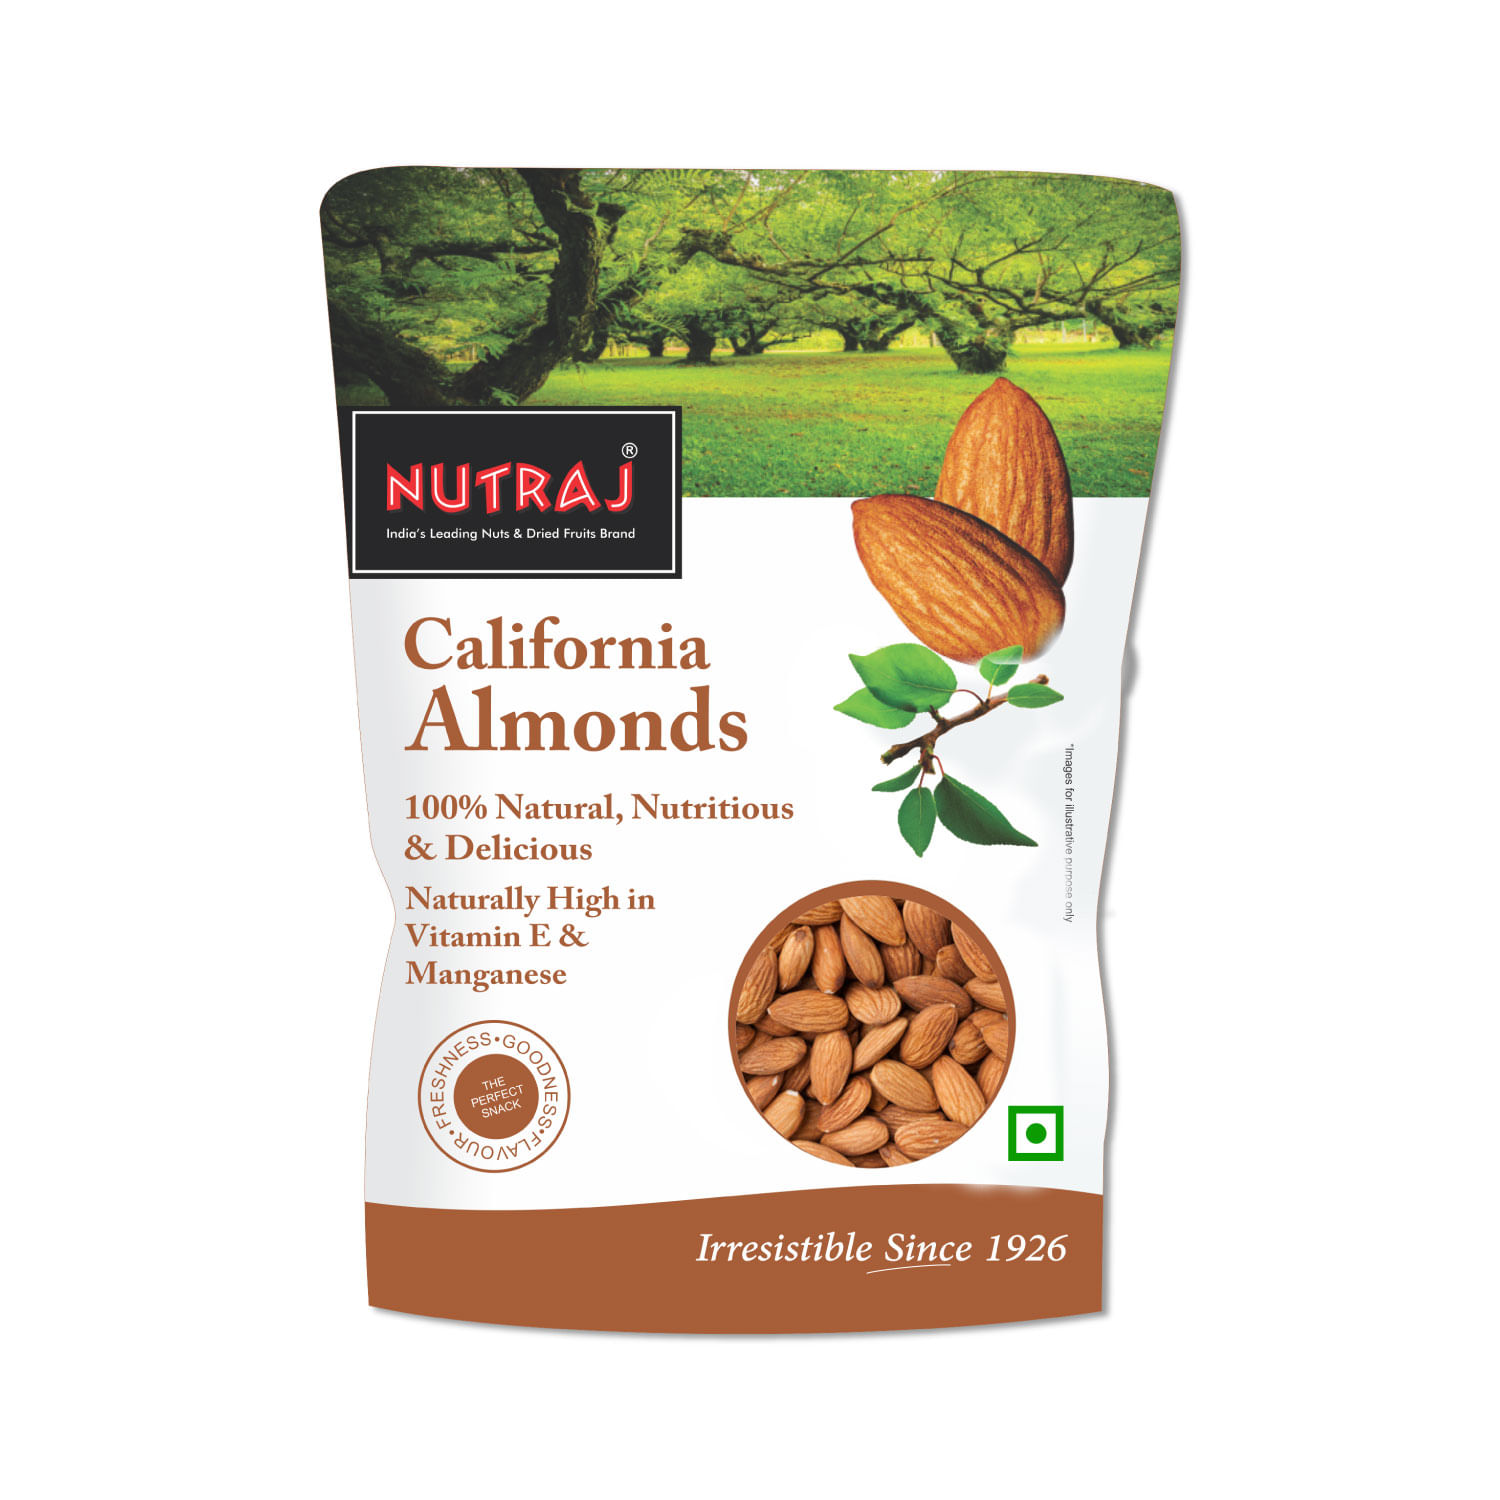 Nutraj Fard Premium Dates (500g) and Nutraj Cashew Nuts W320 (250g) and Nutraj California Almonds (250g)